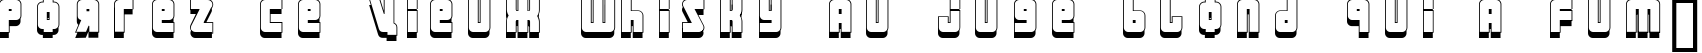 Пример написания шрифтом URAL 3d текста на французском